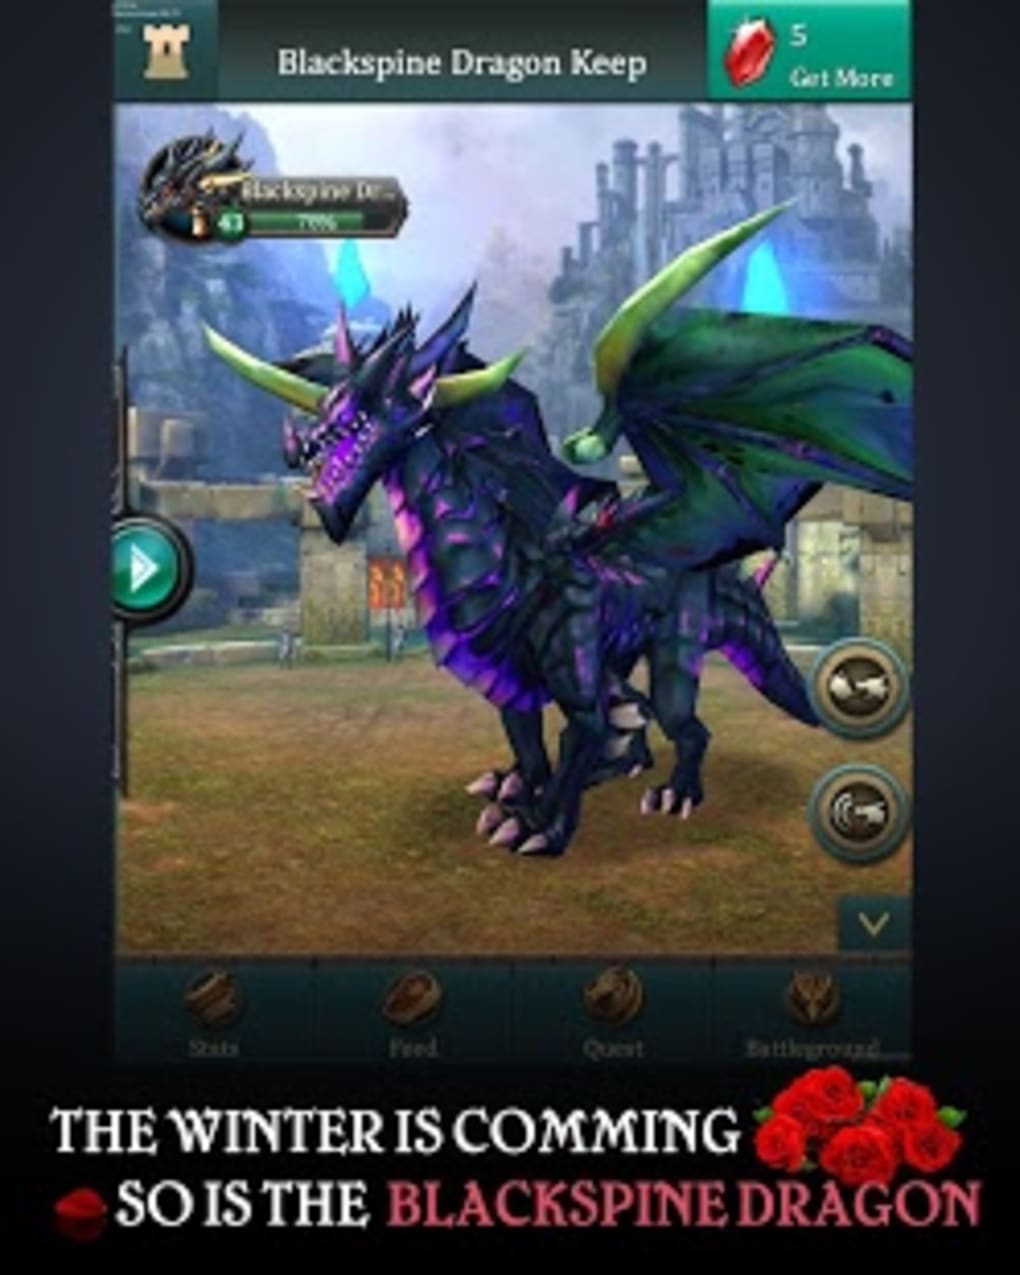 Dragons of Atlantis - Apps on Google Play